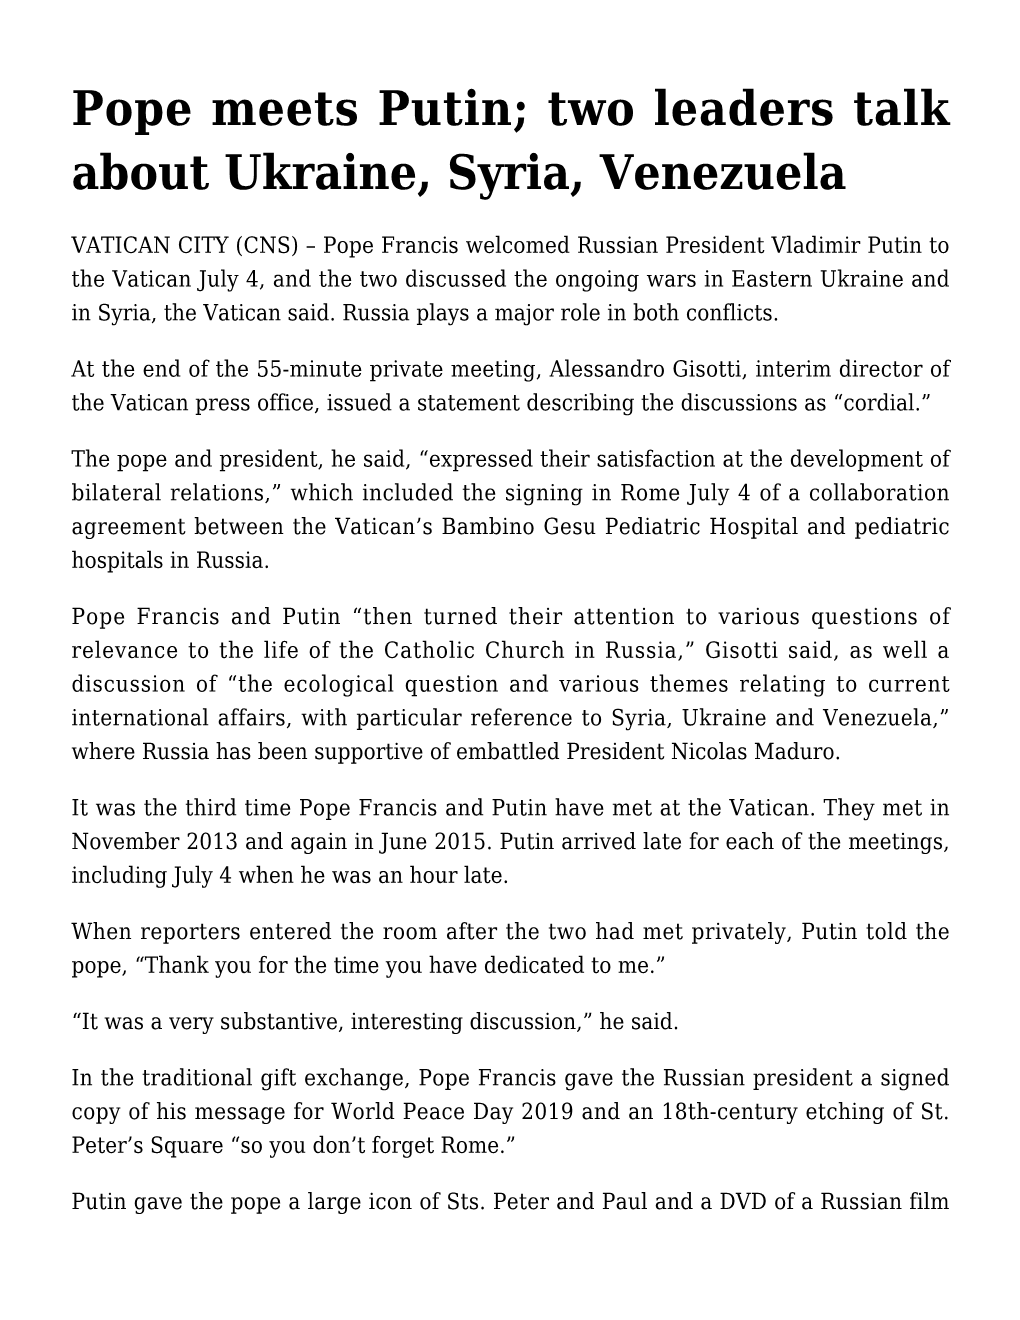 Pope Meets Putin; Two Leaders Talk About Ukraine, Syria, Venezuela